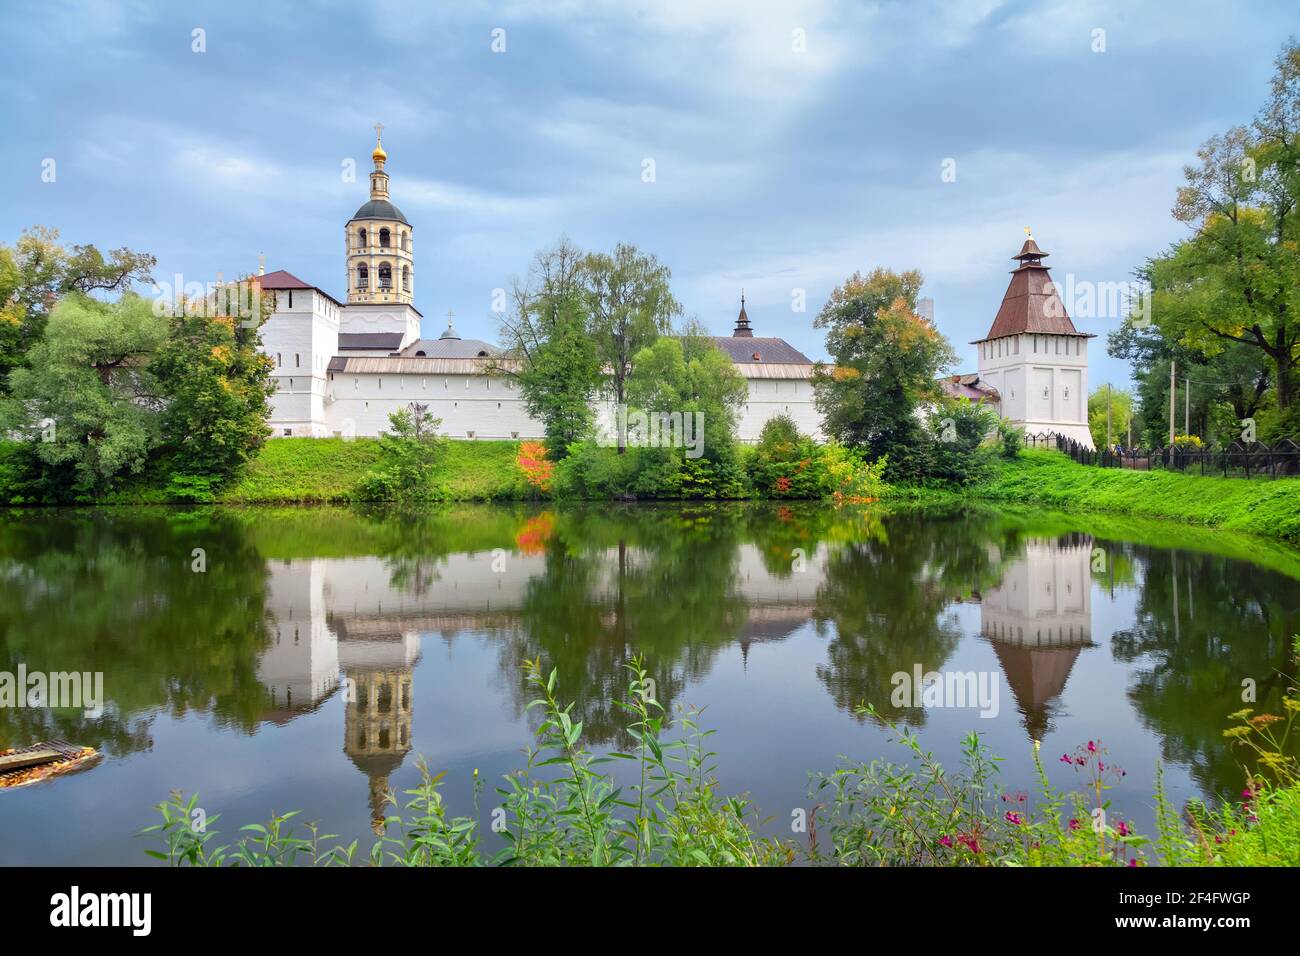 St. Paphnutius of Borovsk Monastery reflecting in water, Kaluga oblast, Russia Stock Photo